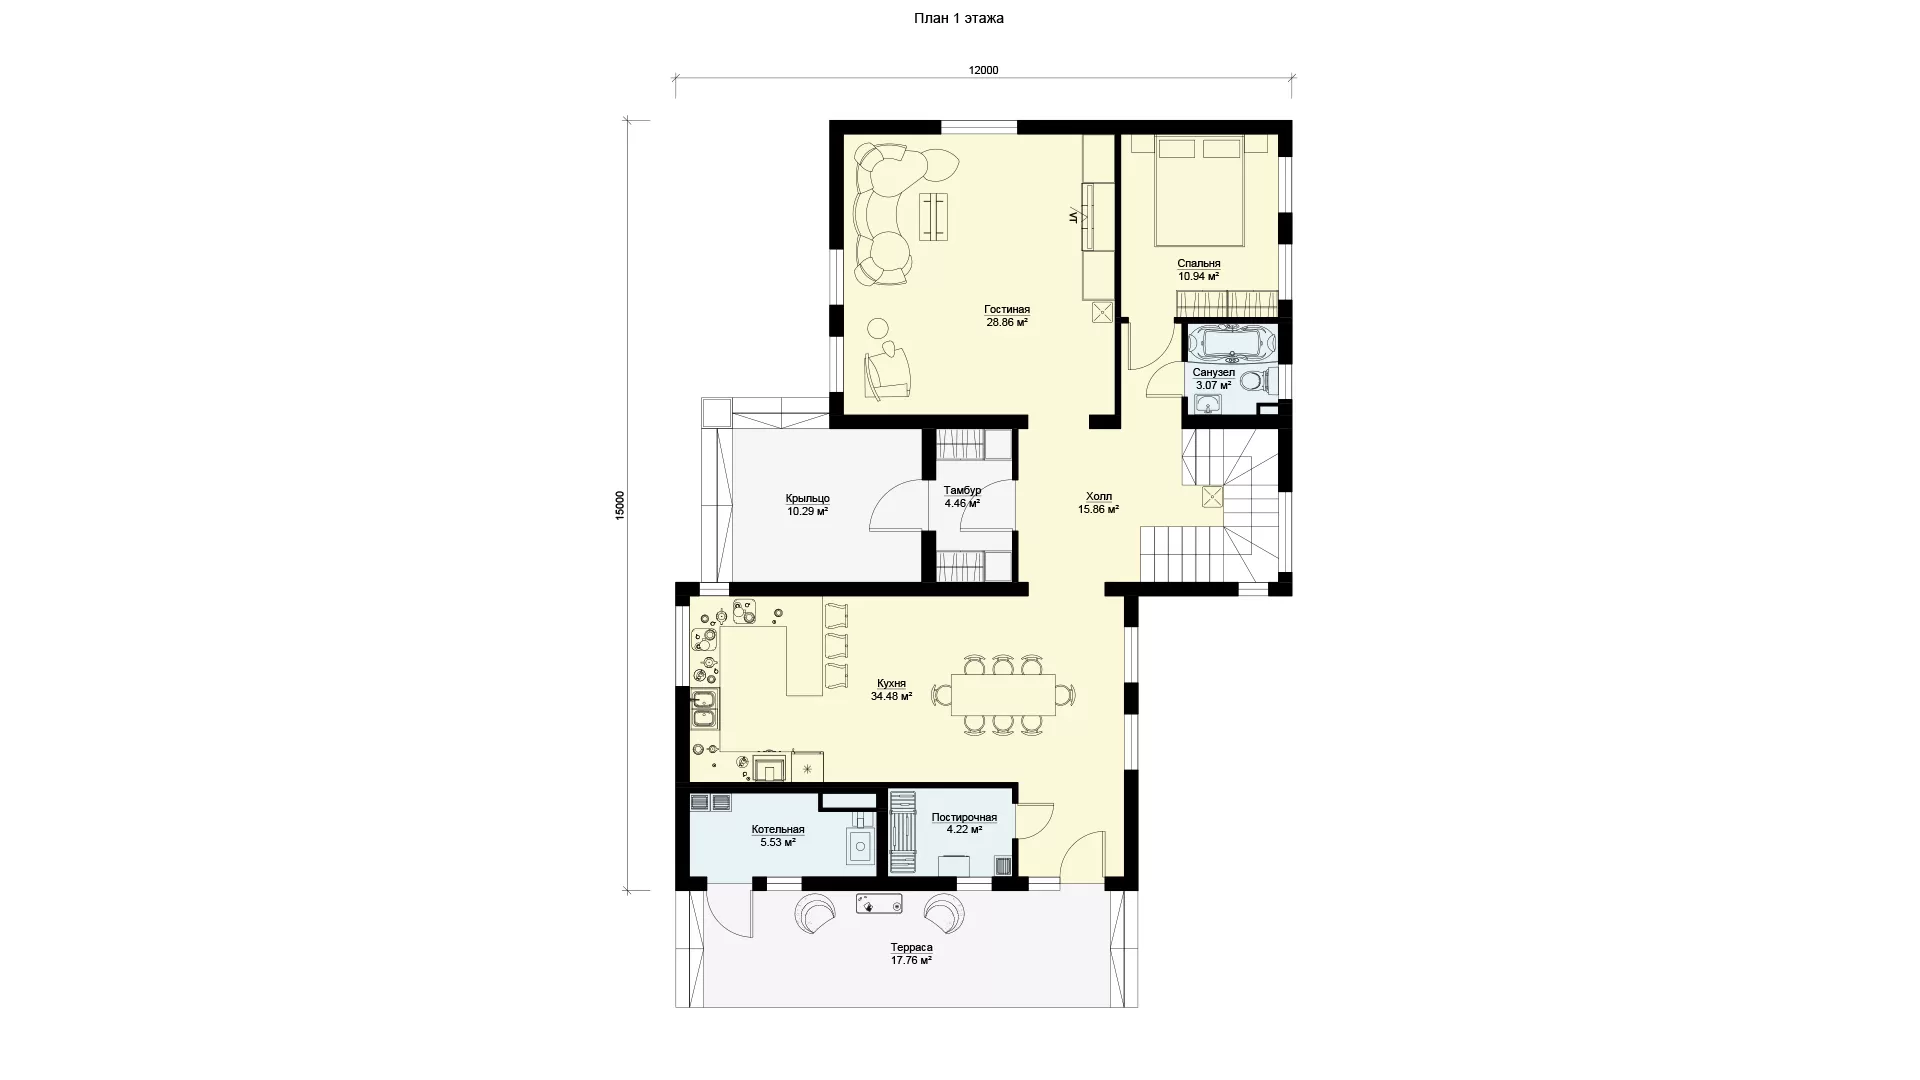 План первого этажа двухэтажного дома 12 на 15, проект БЭНПАН МС-296